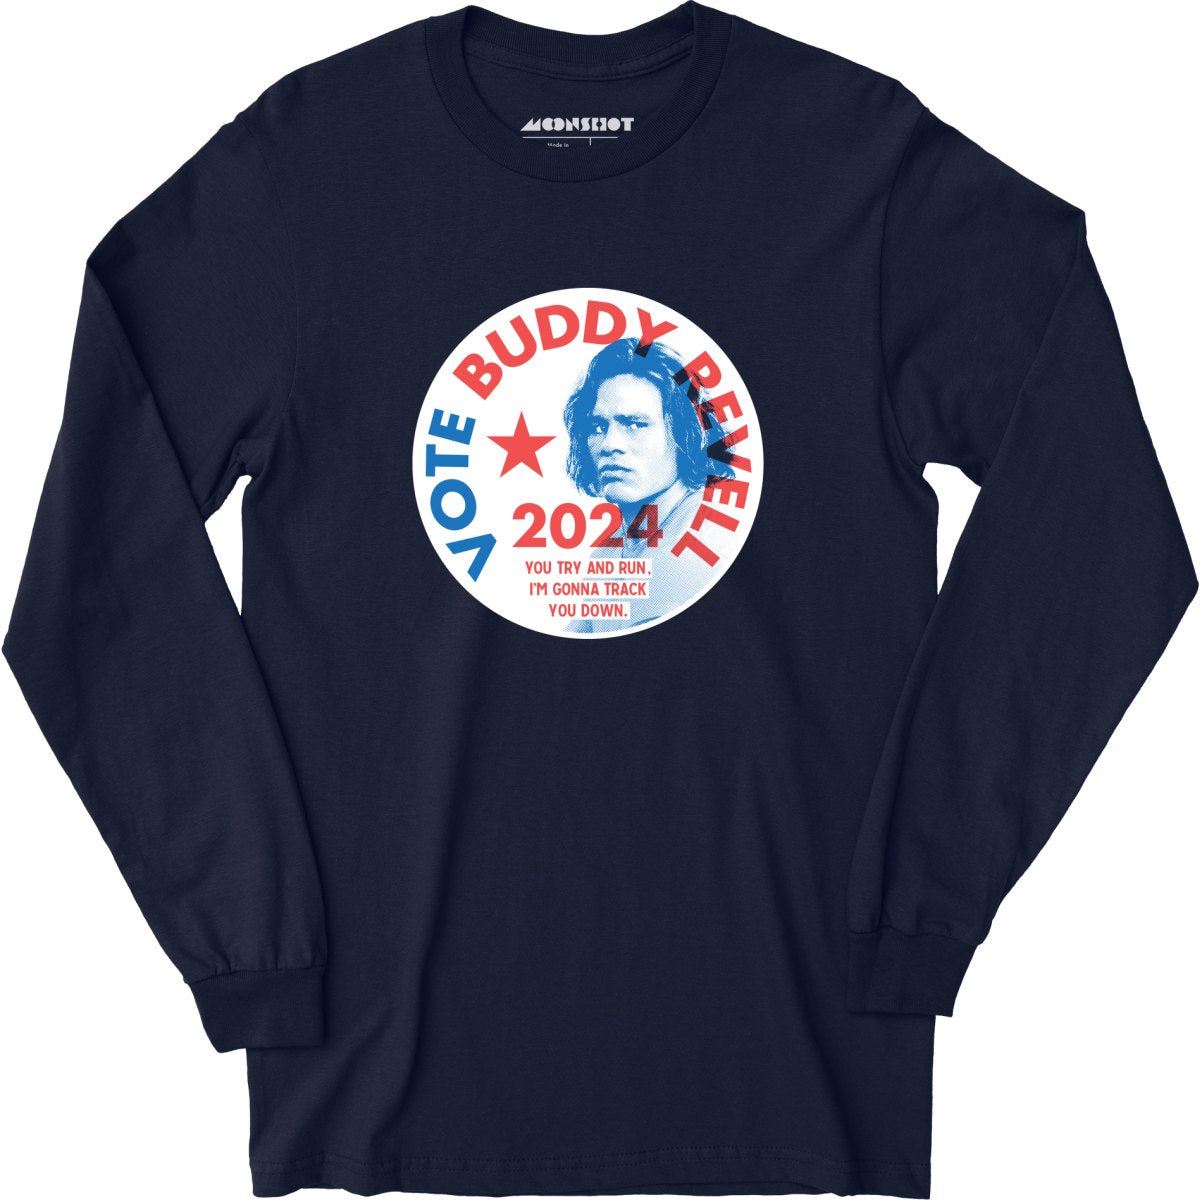 Buddy Revell 2024 - Long Sleeve T-Shirt